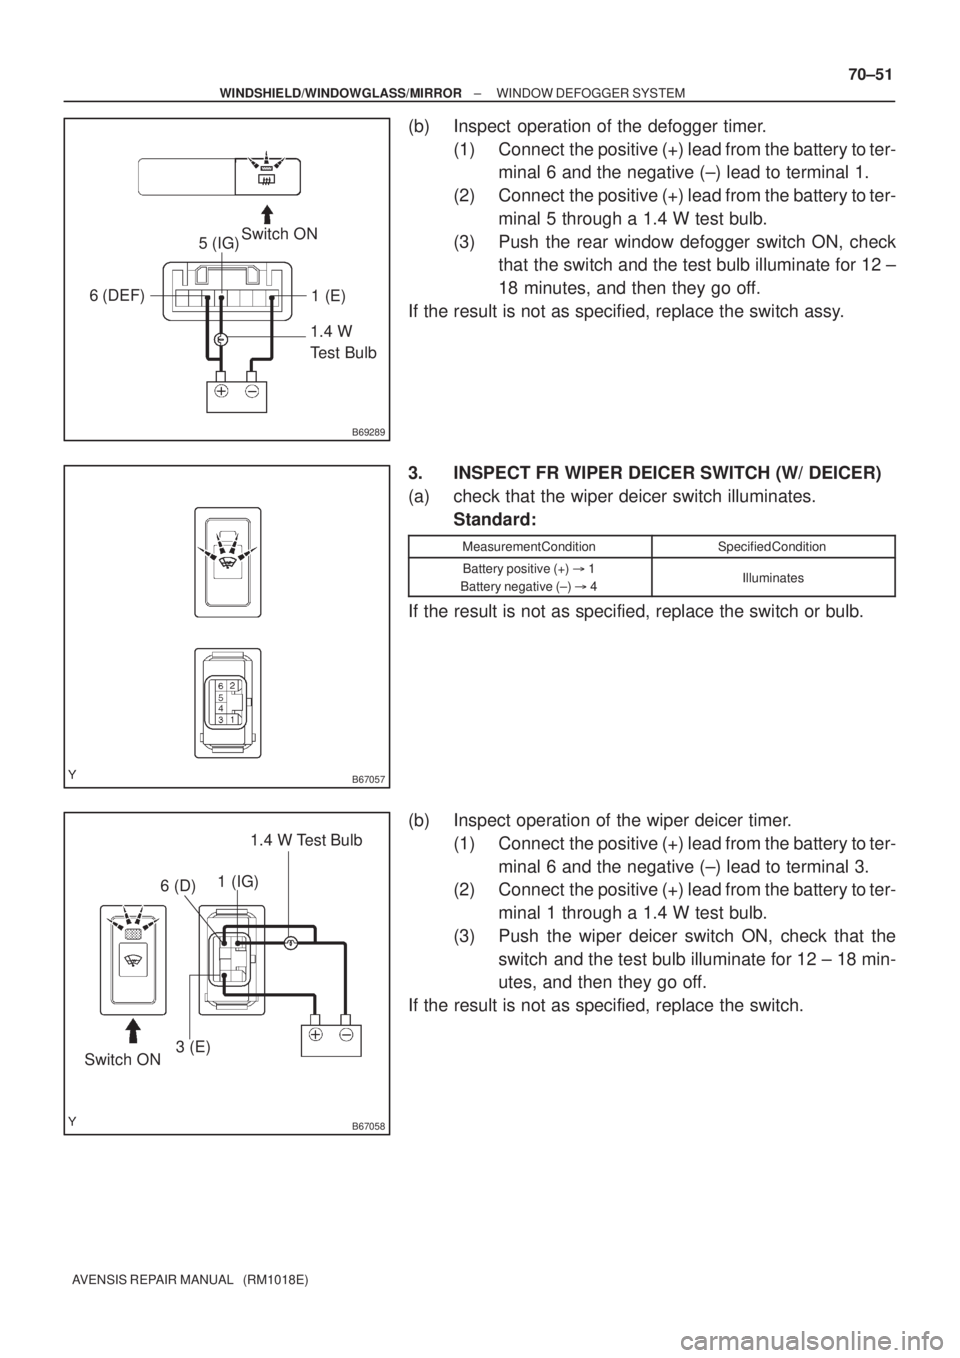 TOYOTA AVENSIS 2005  Service Repair Manual B69289
1.4 W 
Test Bulb Switch ON
5 (IG)
6 (DEF)
1 (E)
B67057
B67058
1.4 W Test Bulb
Switch ON1 (IG)
6 (D)
3 (E)
± WINDSHIELD/WINDOWGLASS/MIRRORWINDOW DEFOGGER SYSTEM
70±51
AVENSIS REPAIR MANUAL   (